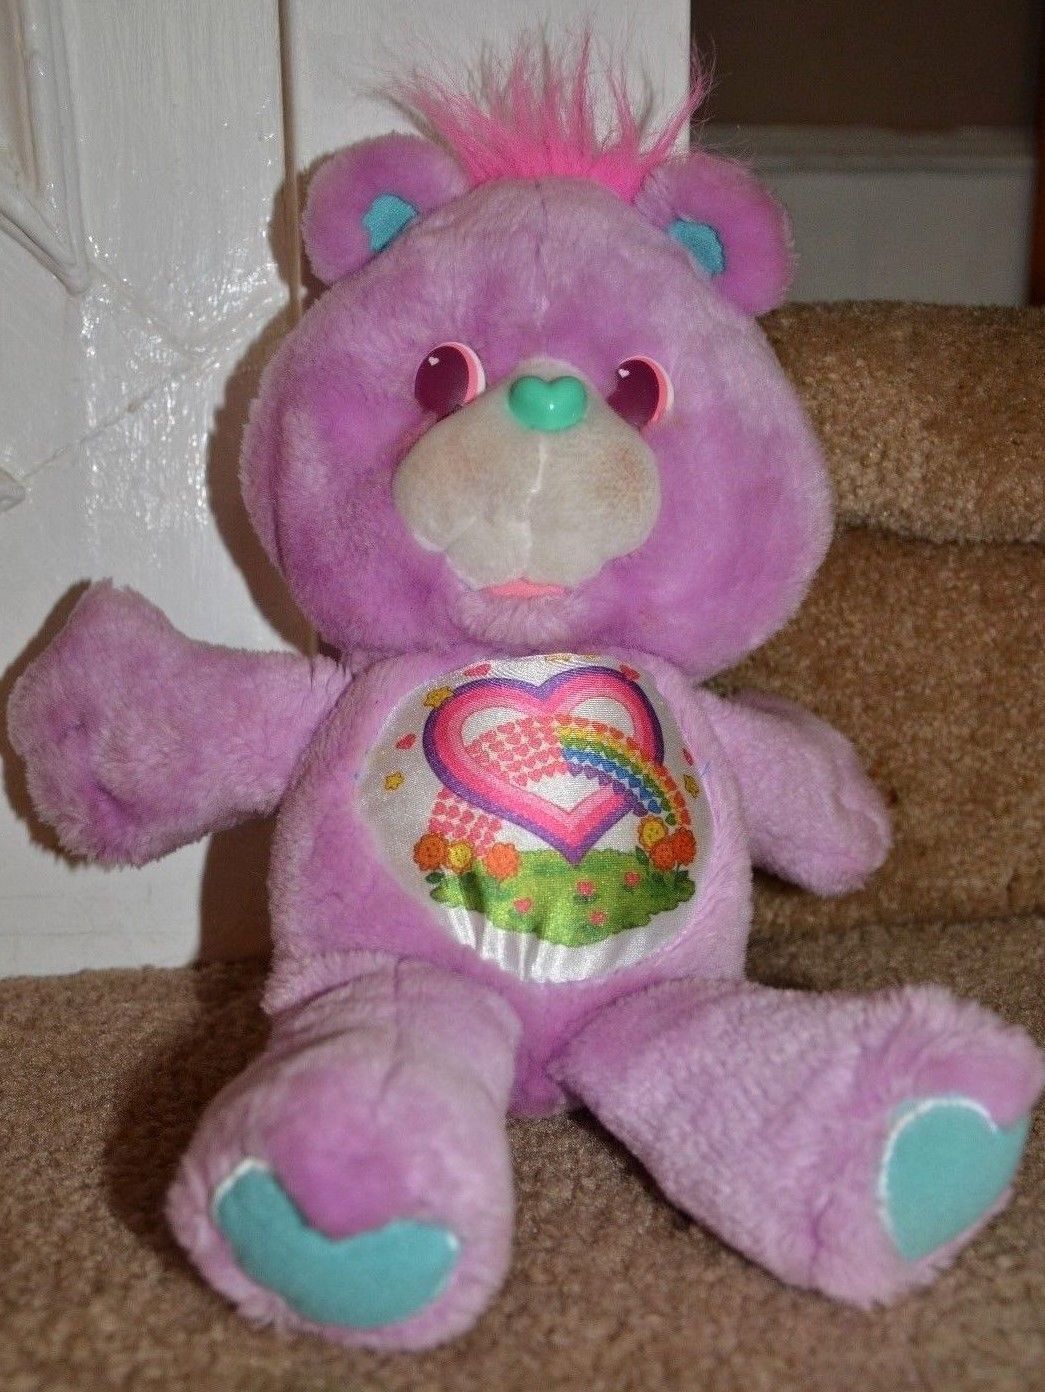 Share Bear Environmental Care Bears 14" Plush Purple Vintage Stuffed Animal 1991